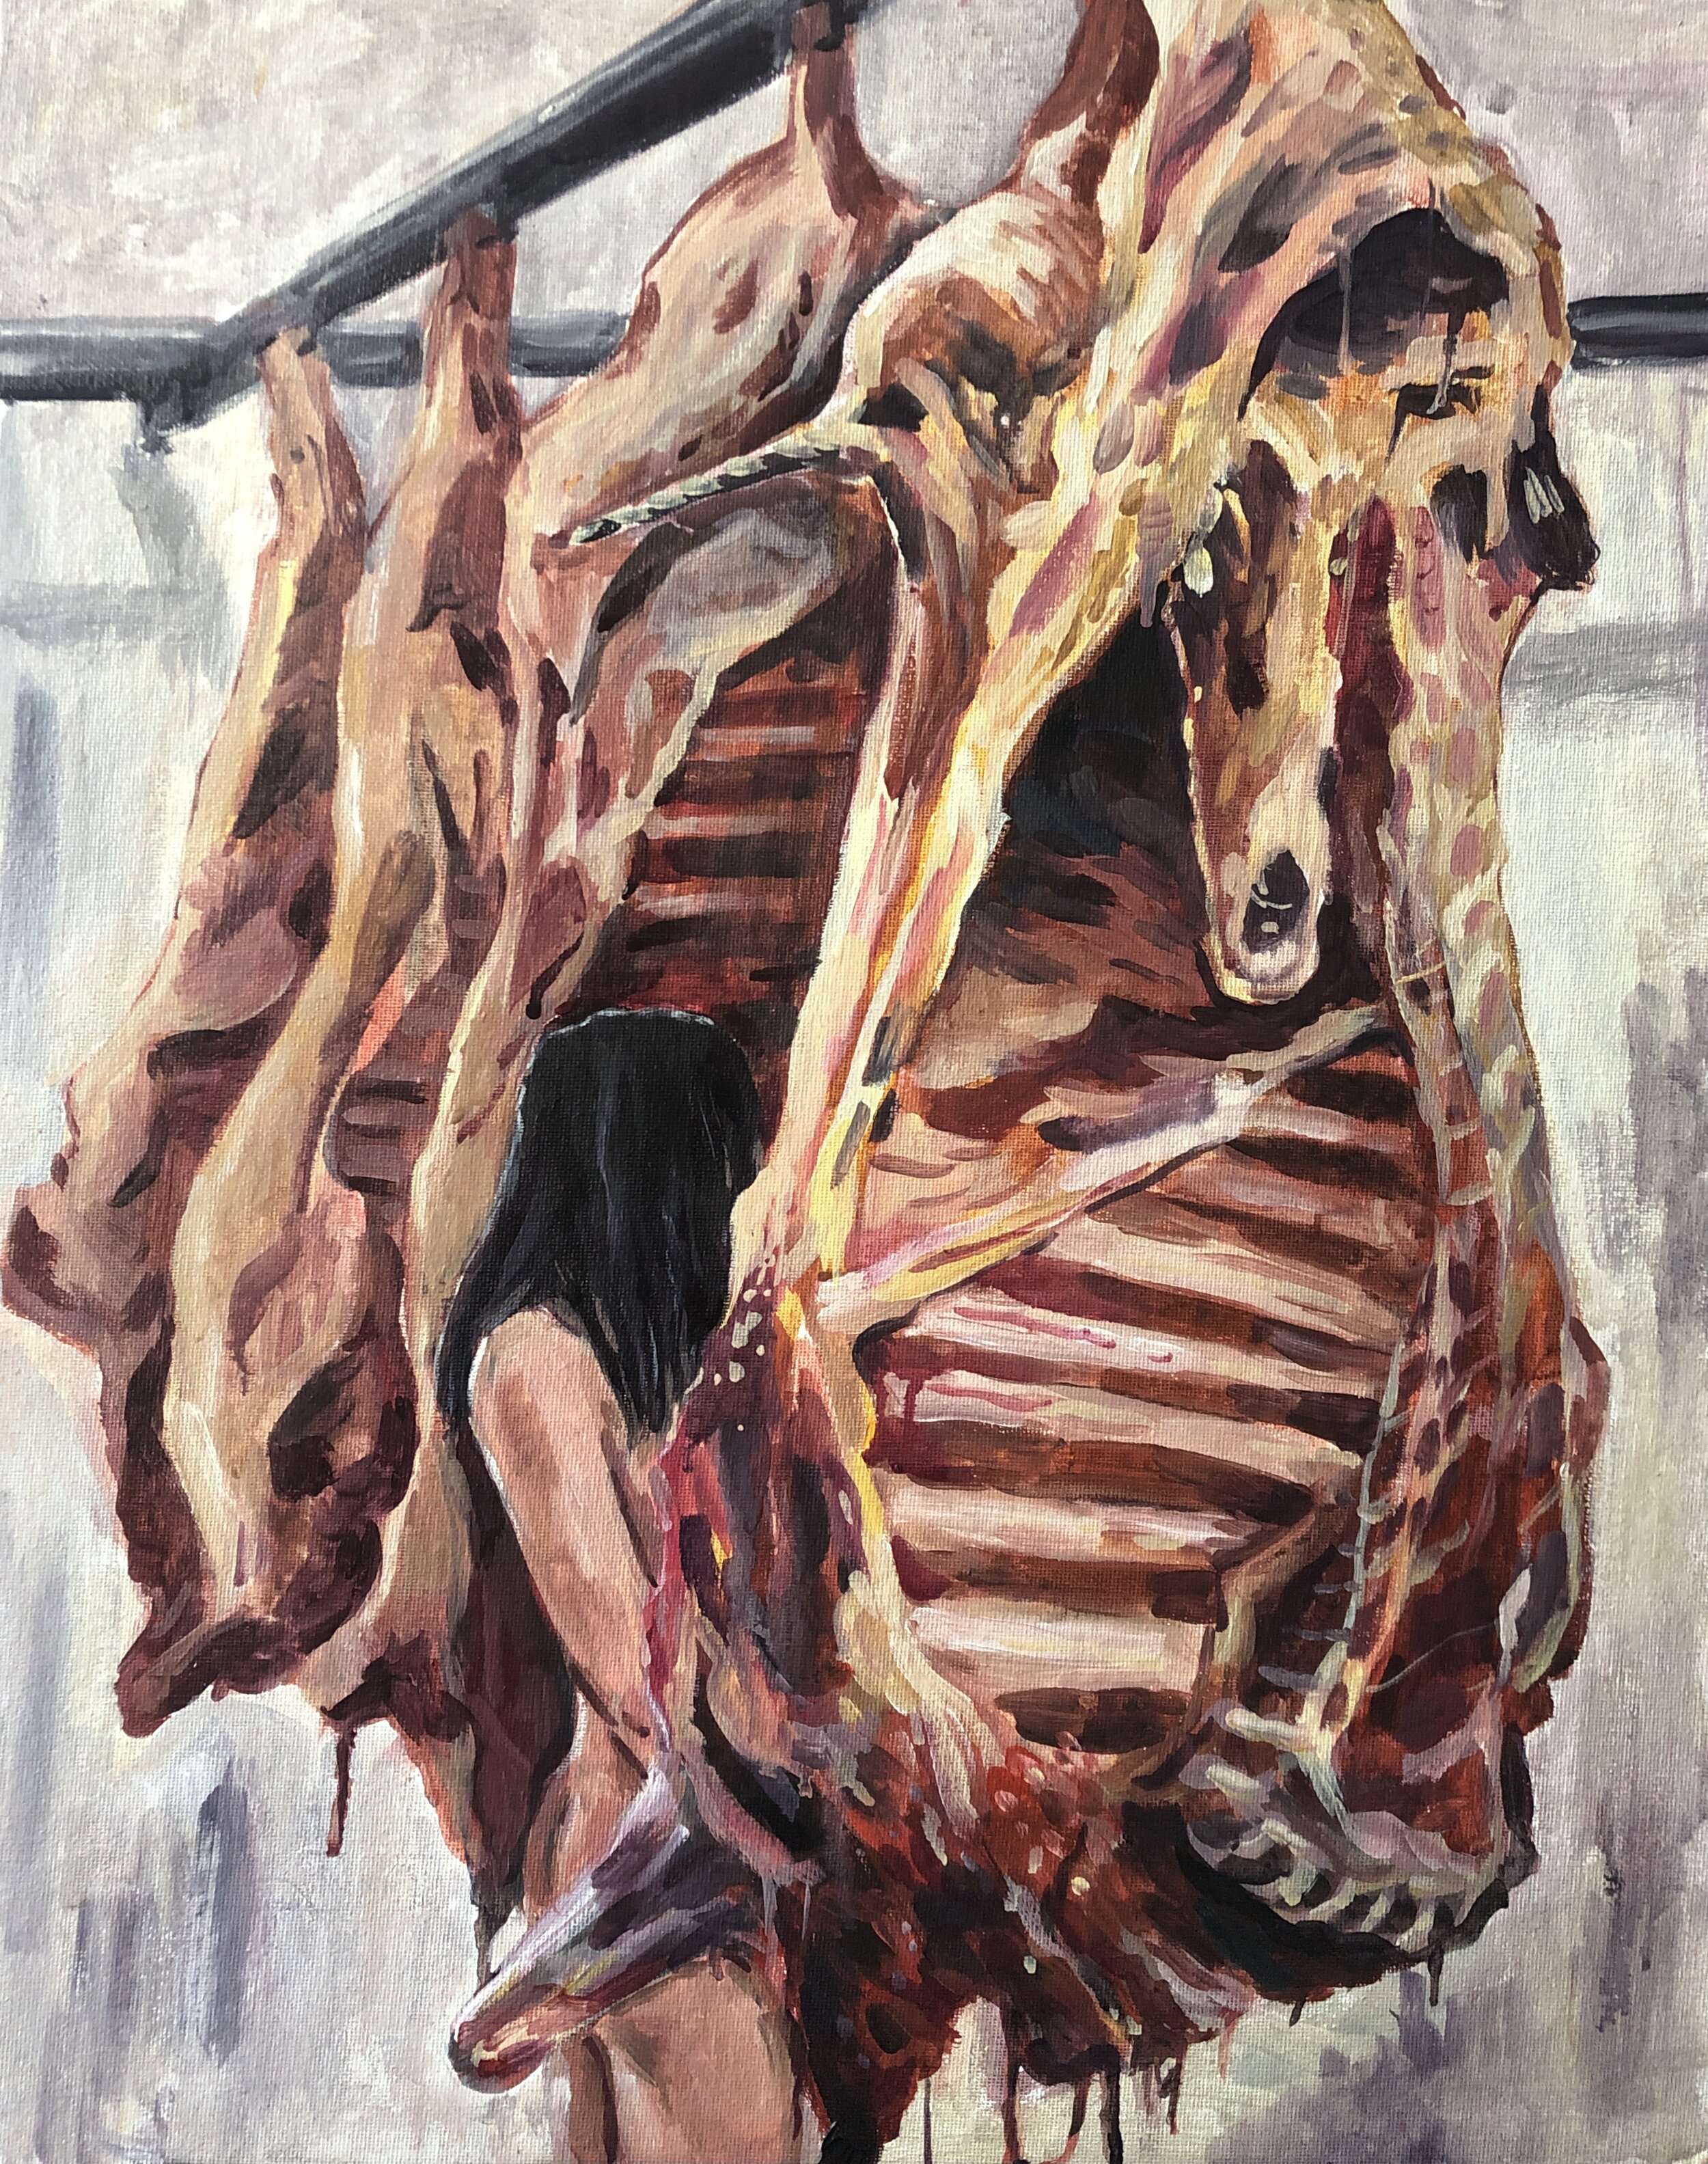 Emily Bi, Hanger, 2021. Oil on canvas, 18in x 24in. 